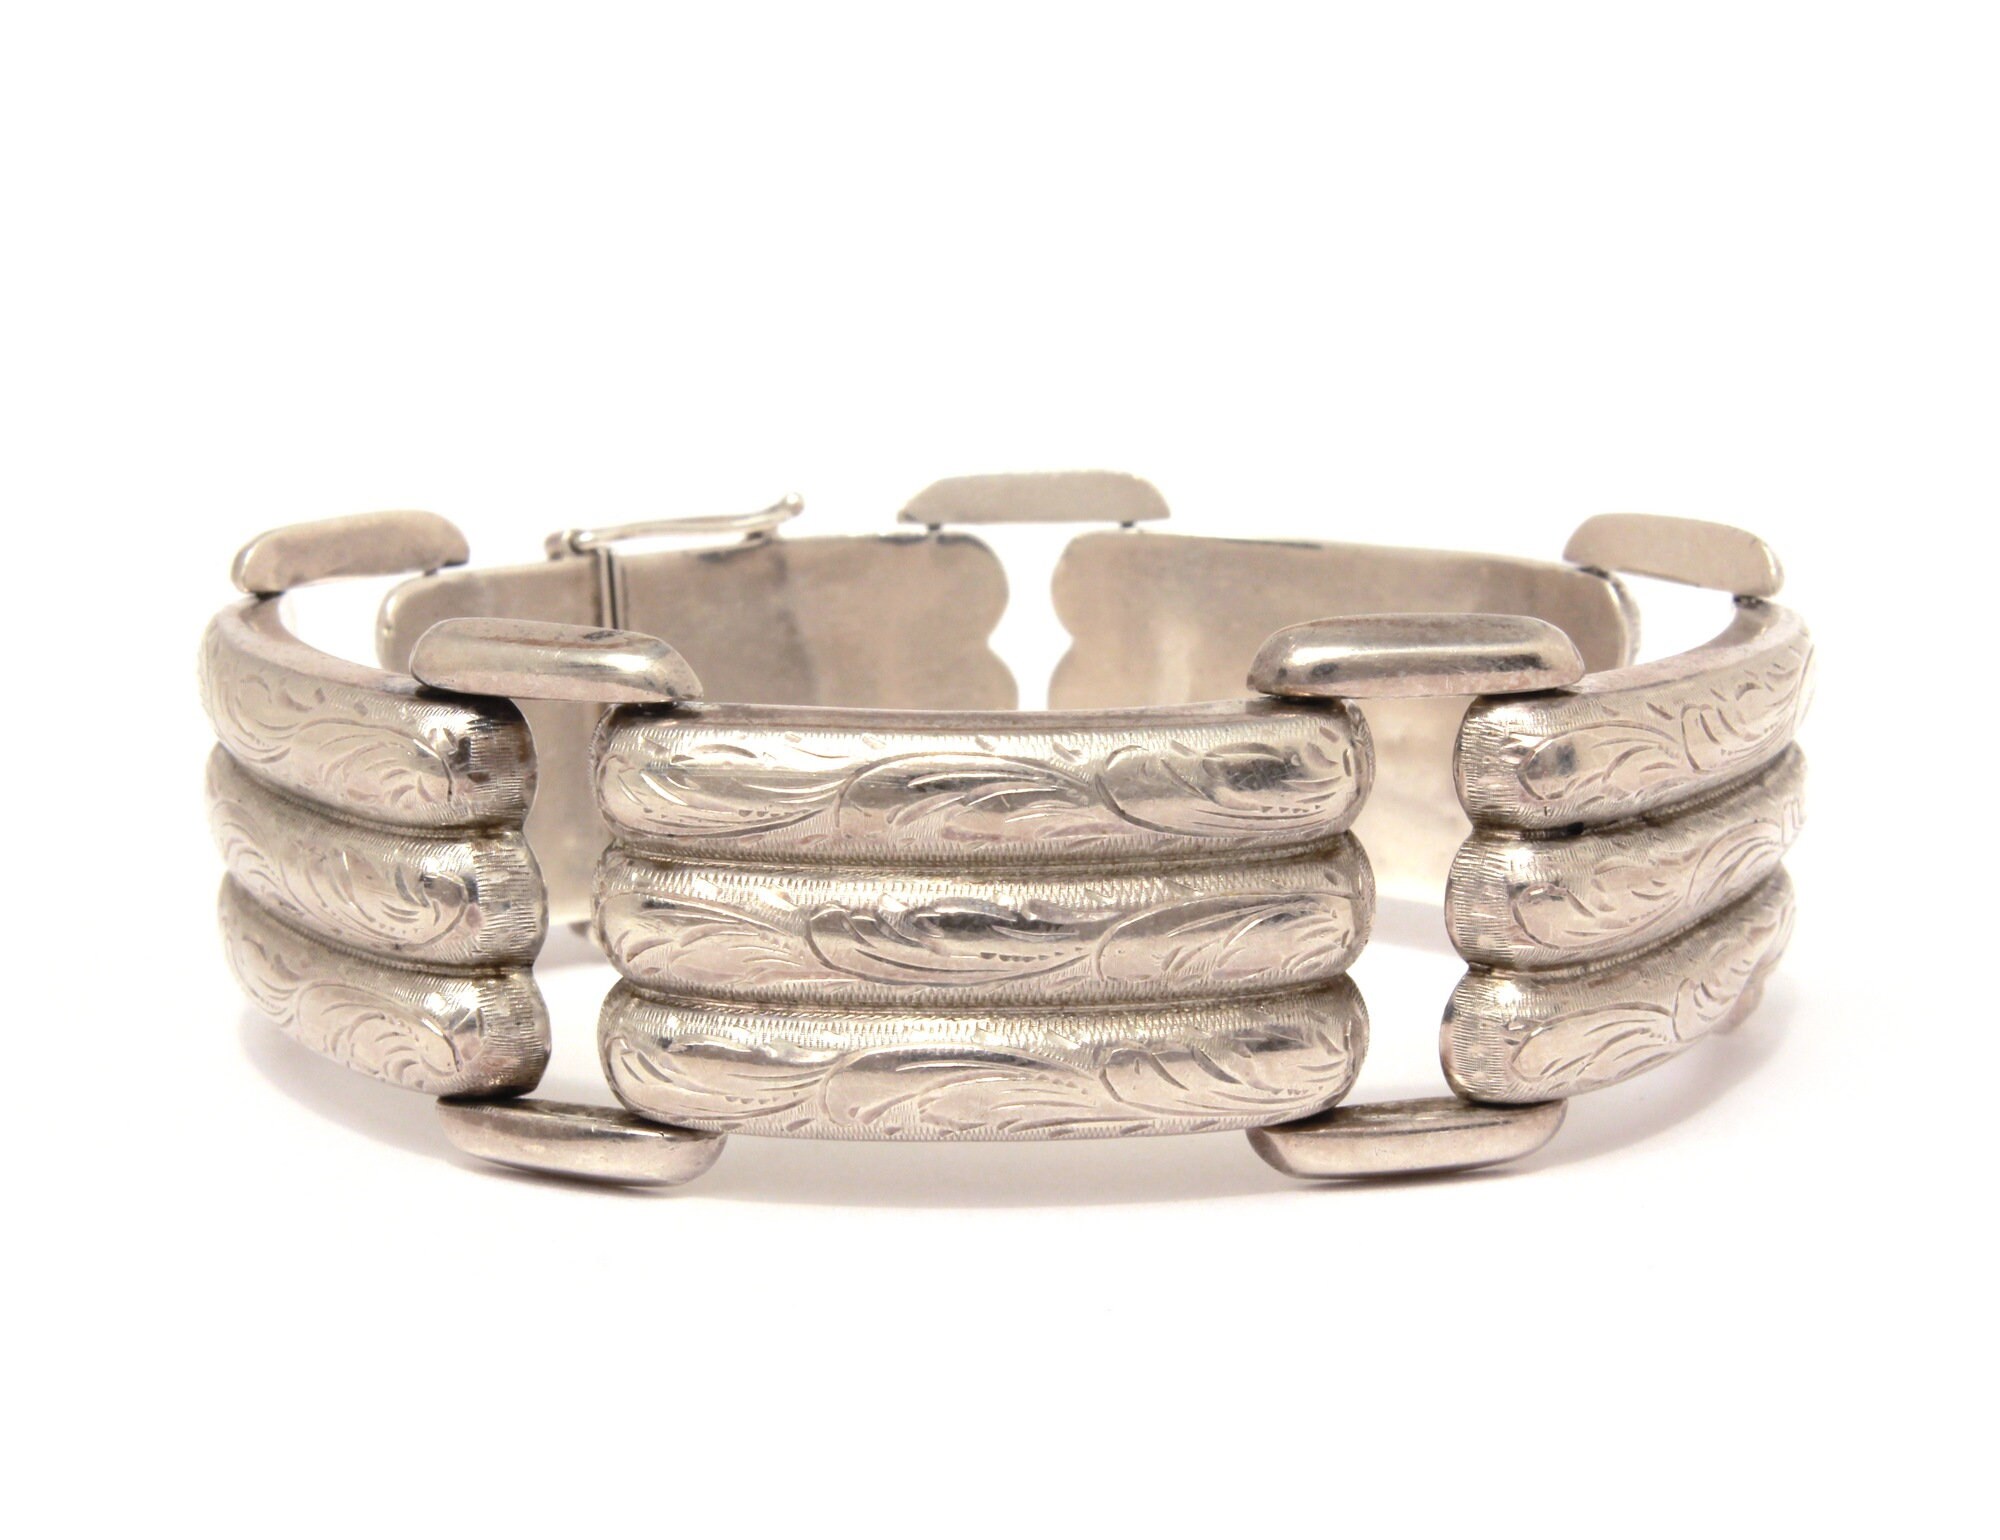 Sterling silver monogrammed cuff bracelet (monogram: sBc)